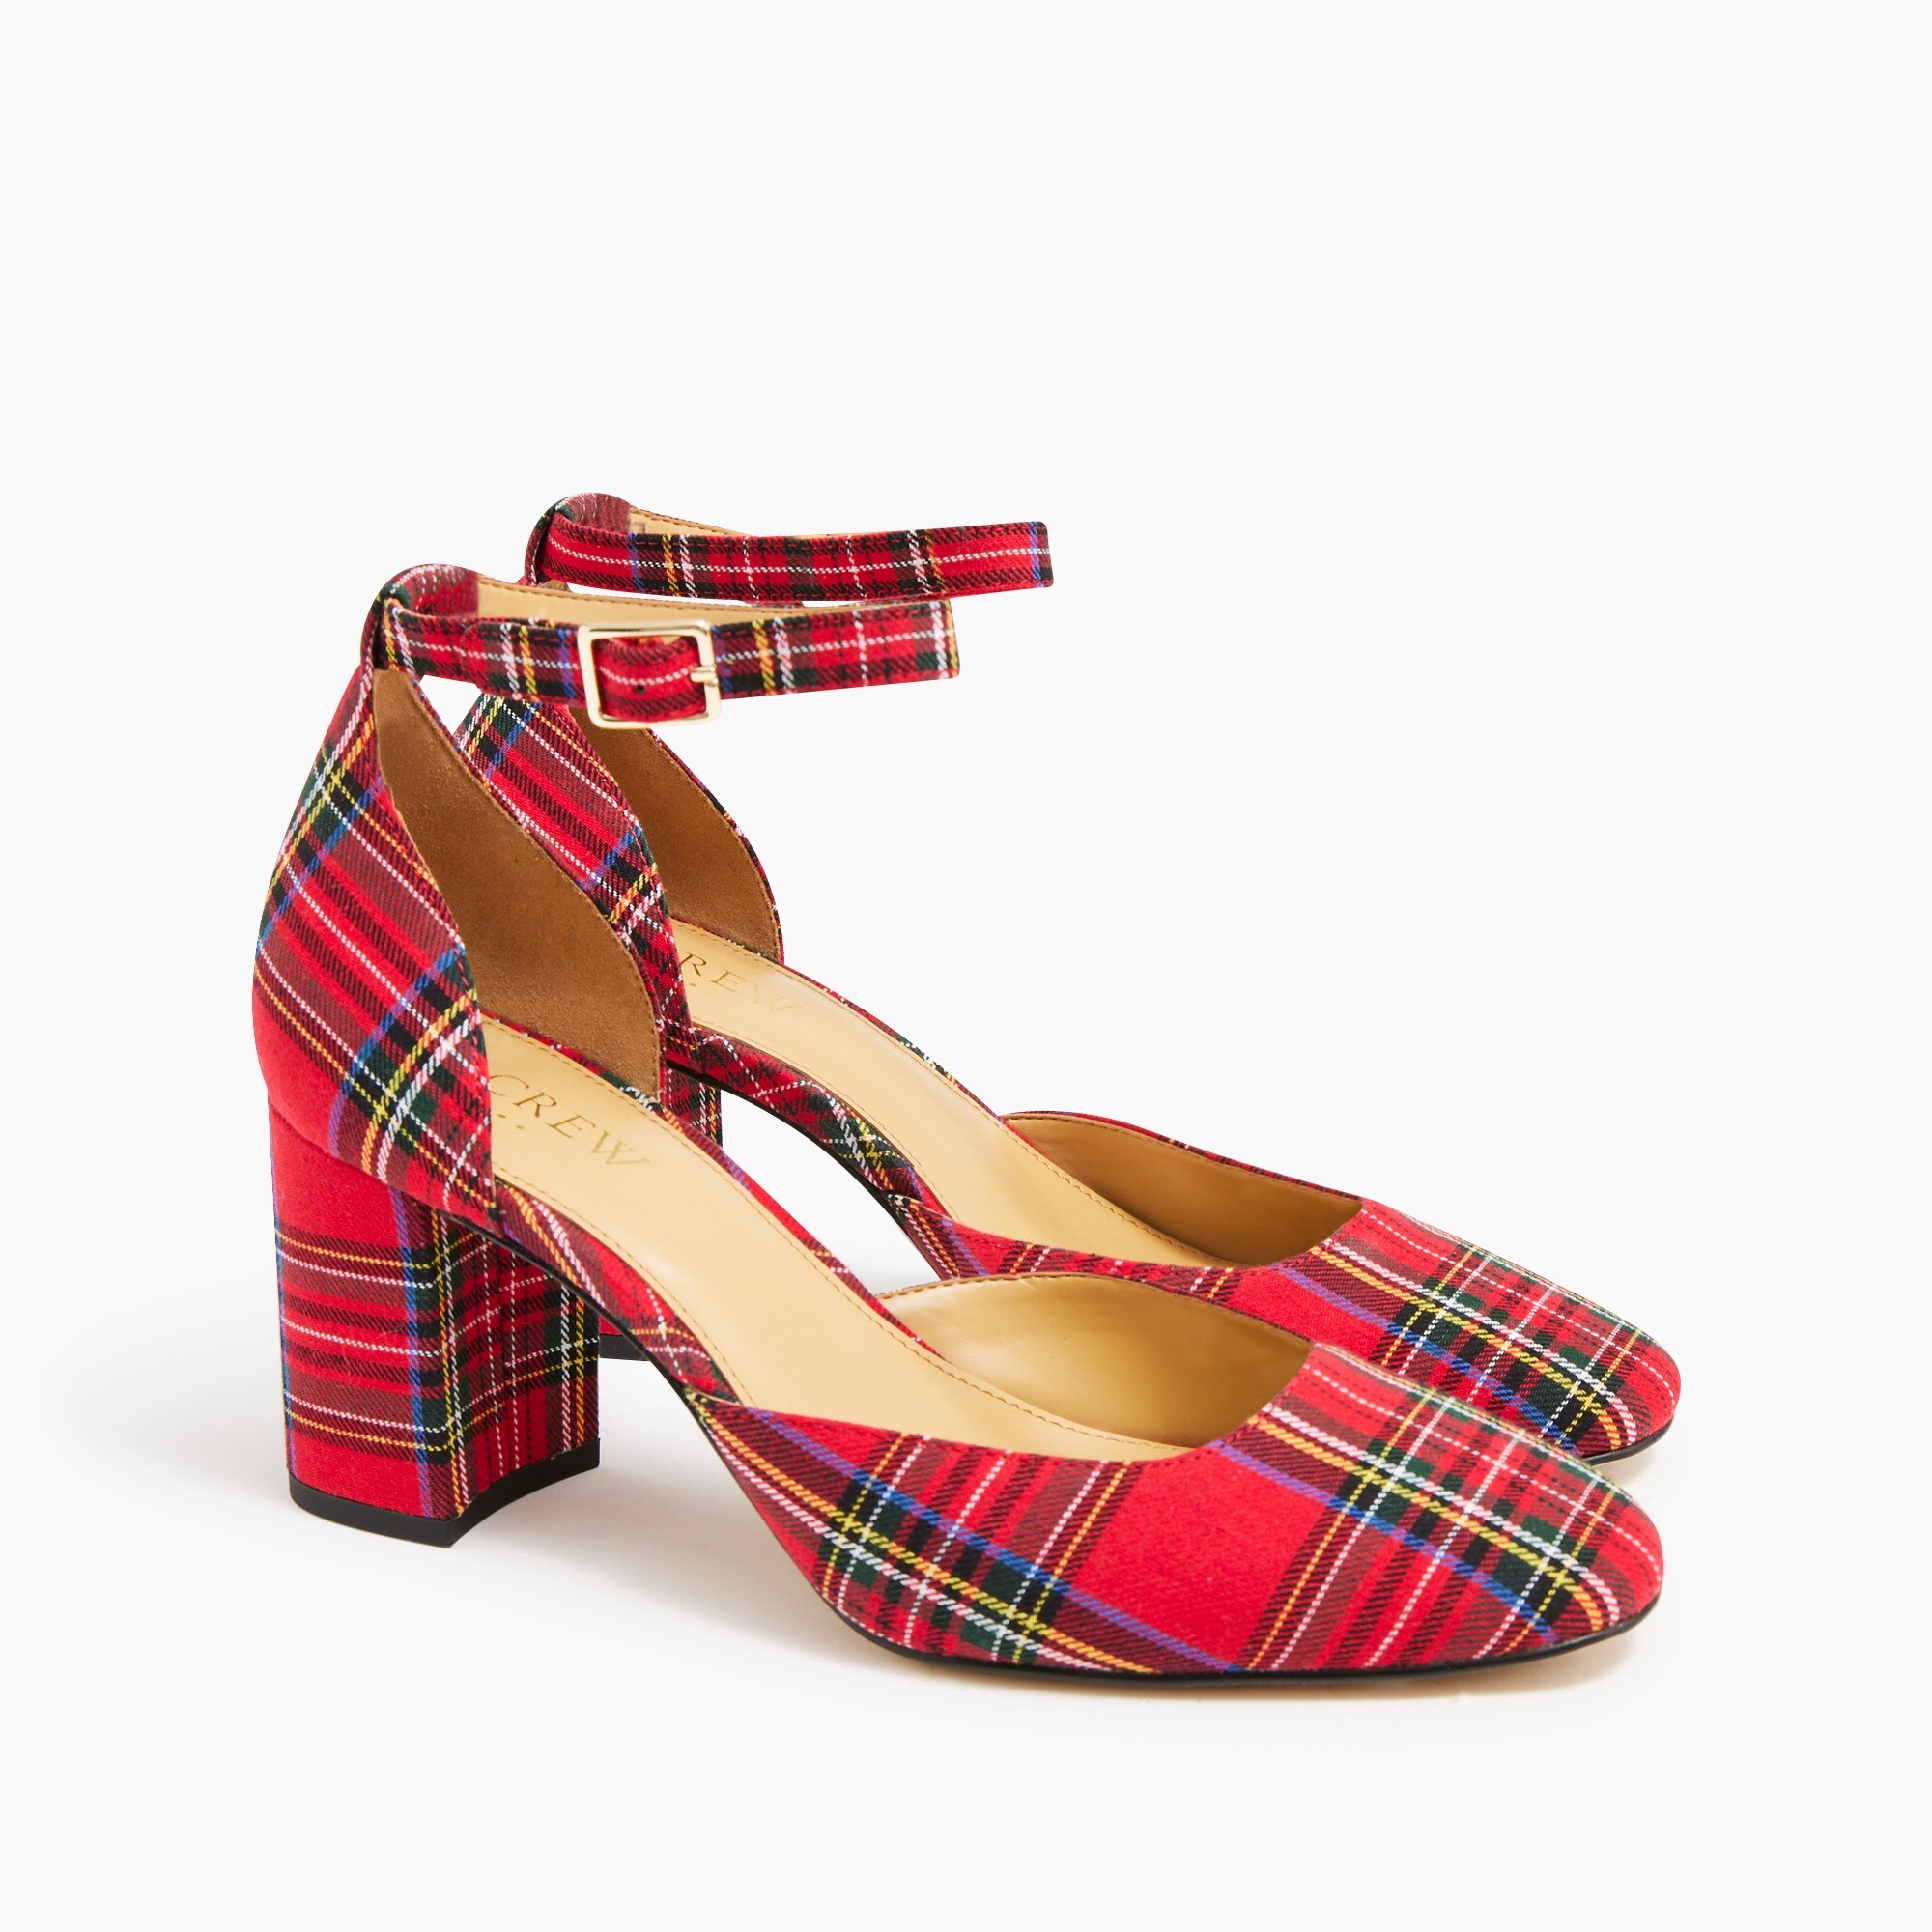  Tartan block heels with ankle strap